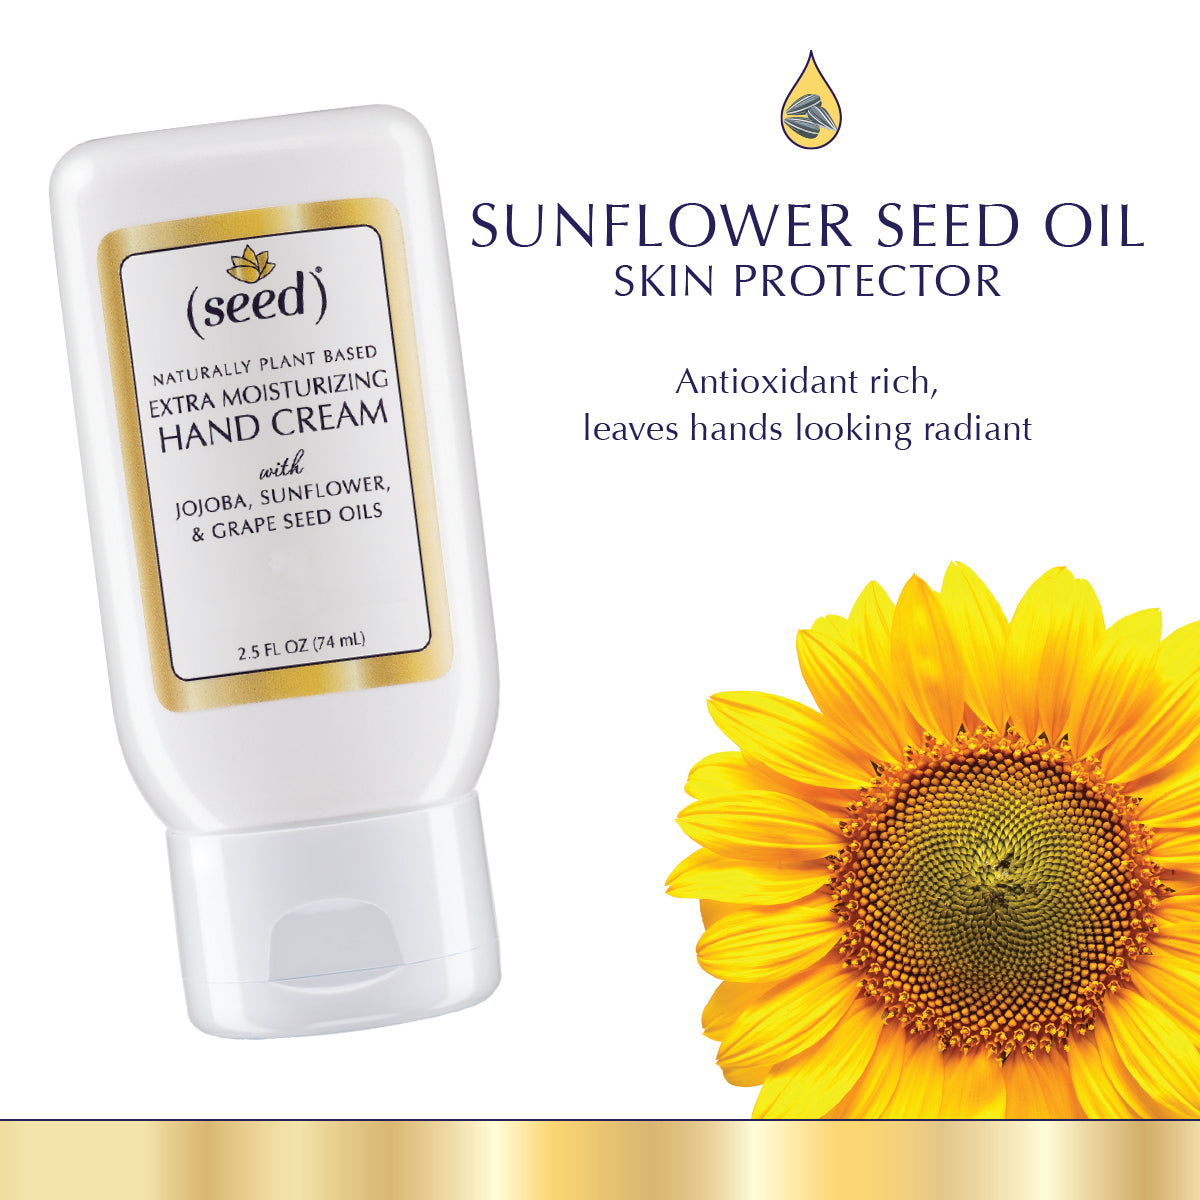 Seed Extra Moisturizing Hand Cream features sunflower seed oil